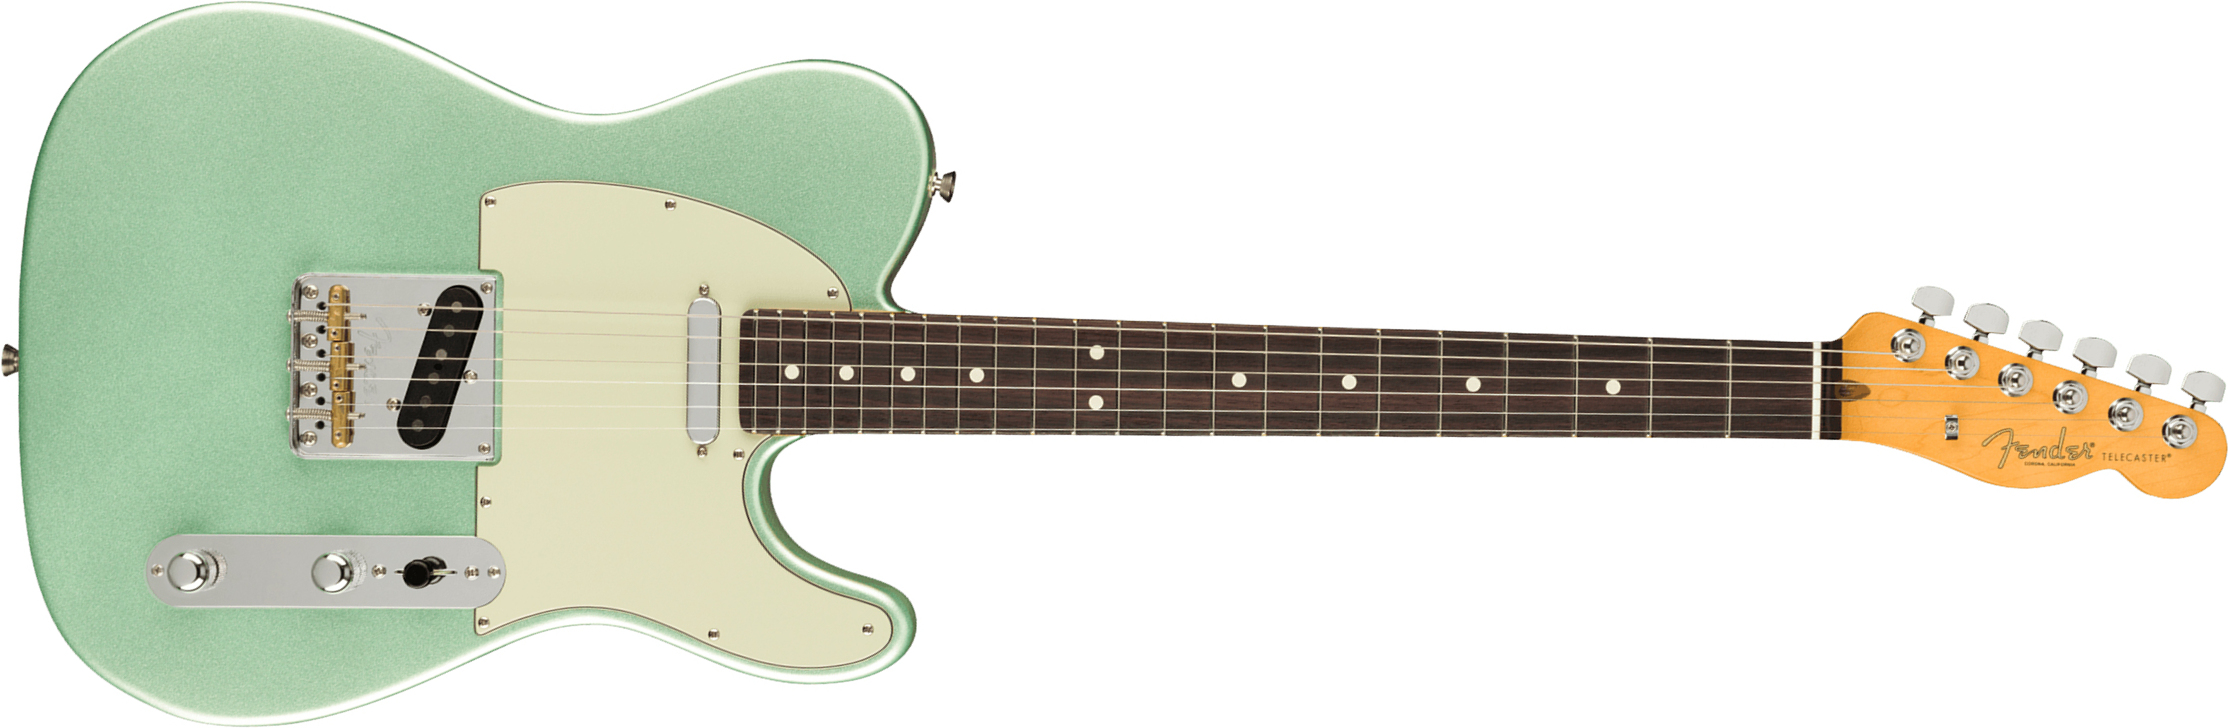 Fender Tele American Professional Ii Usa Rw - Mystic Surf Green - Guitare Électrique Forme Tel - Main picture